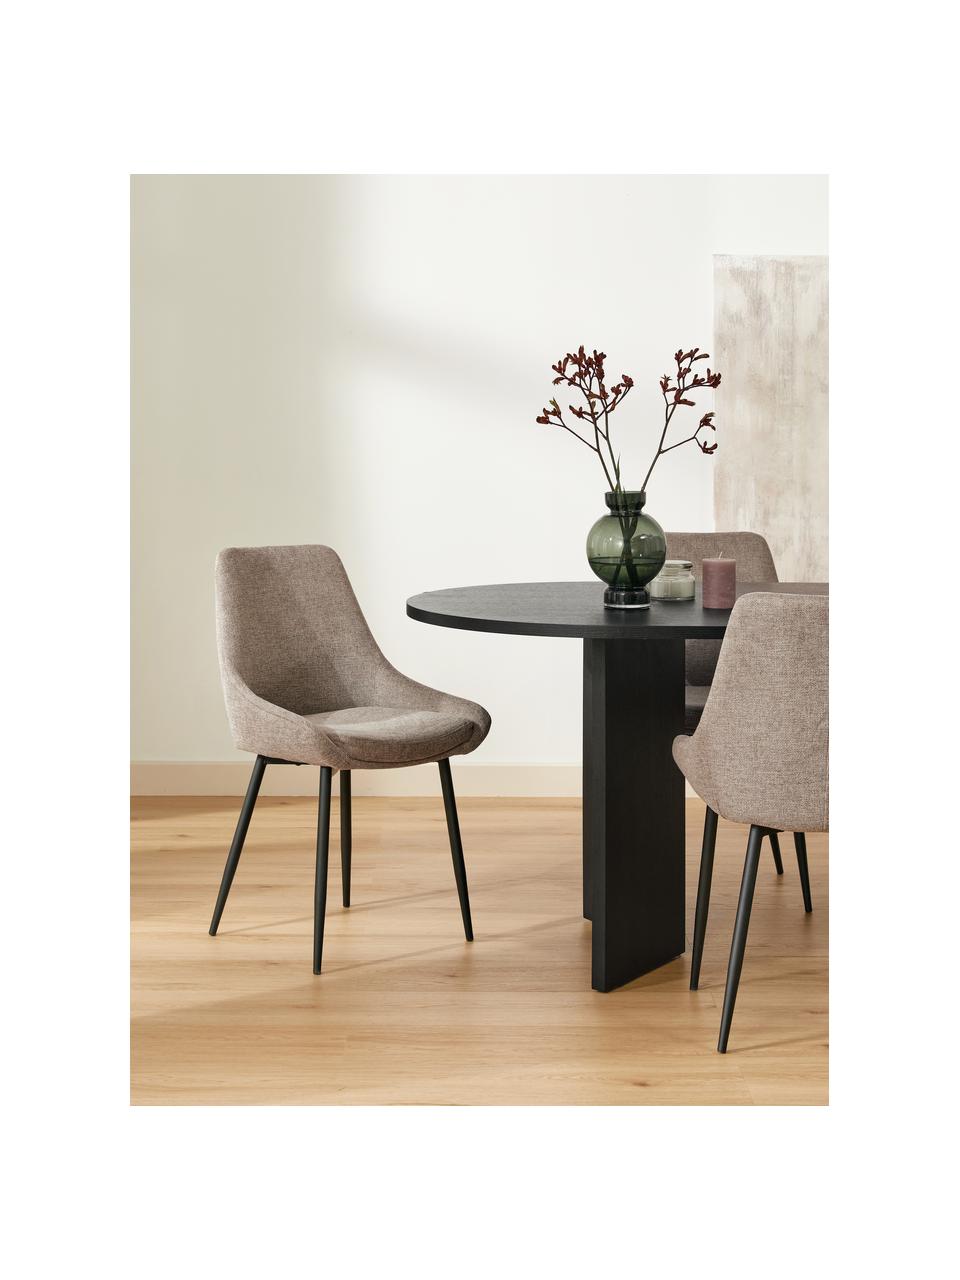 Čalúnená stolička Sierra, 2 ks, Béžová, Š 49 x H 55 cm